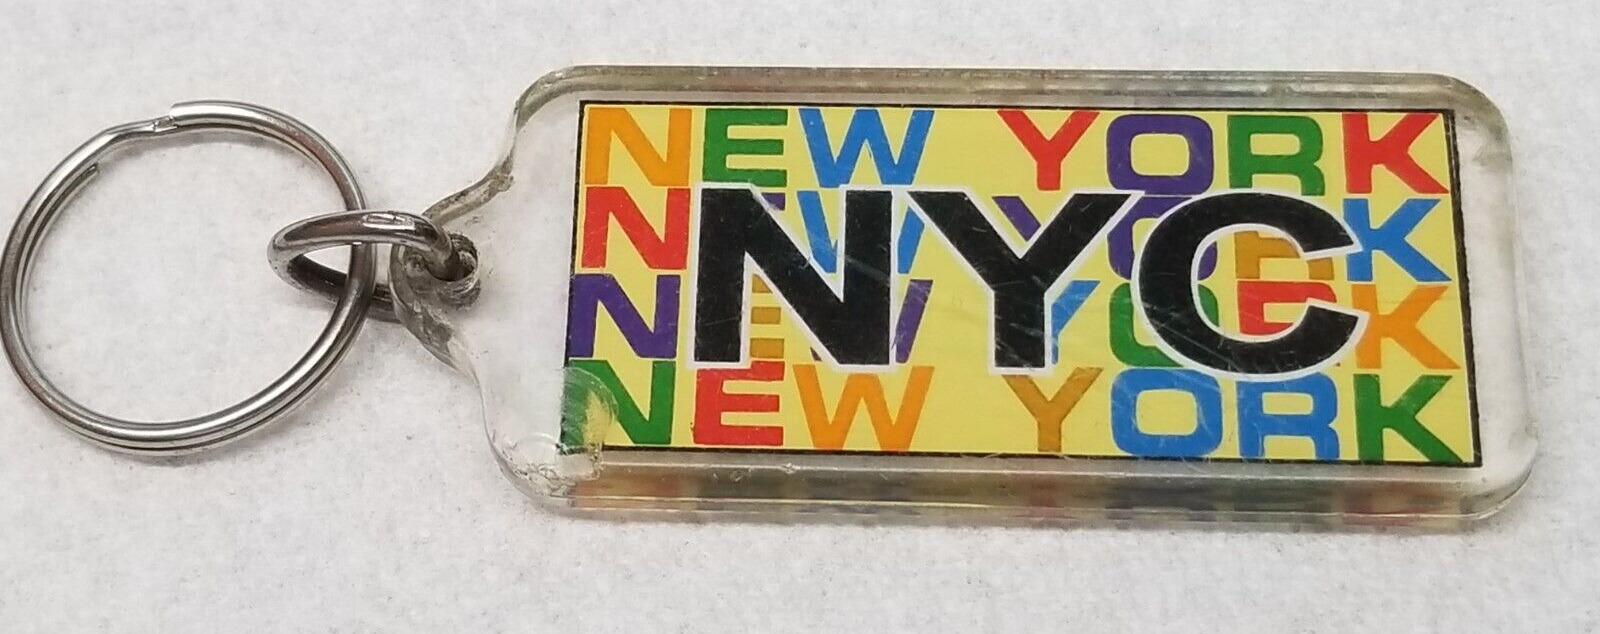 NYC New York Keychain Punk Rainbow Colorful Plastic 1980s Vintage